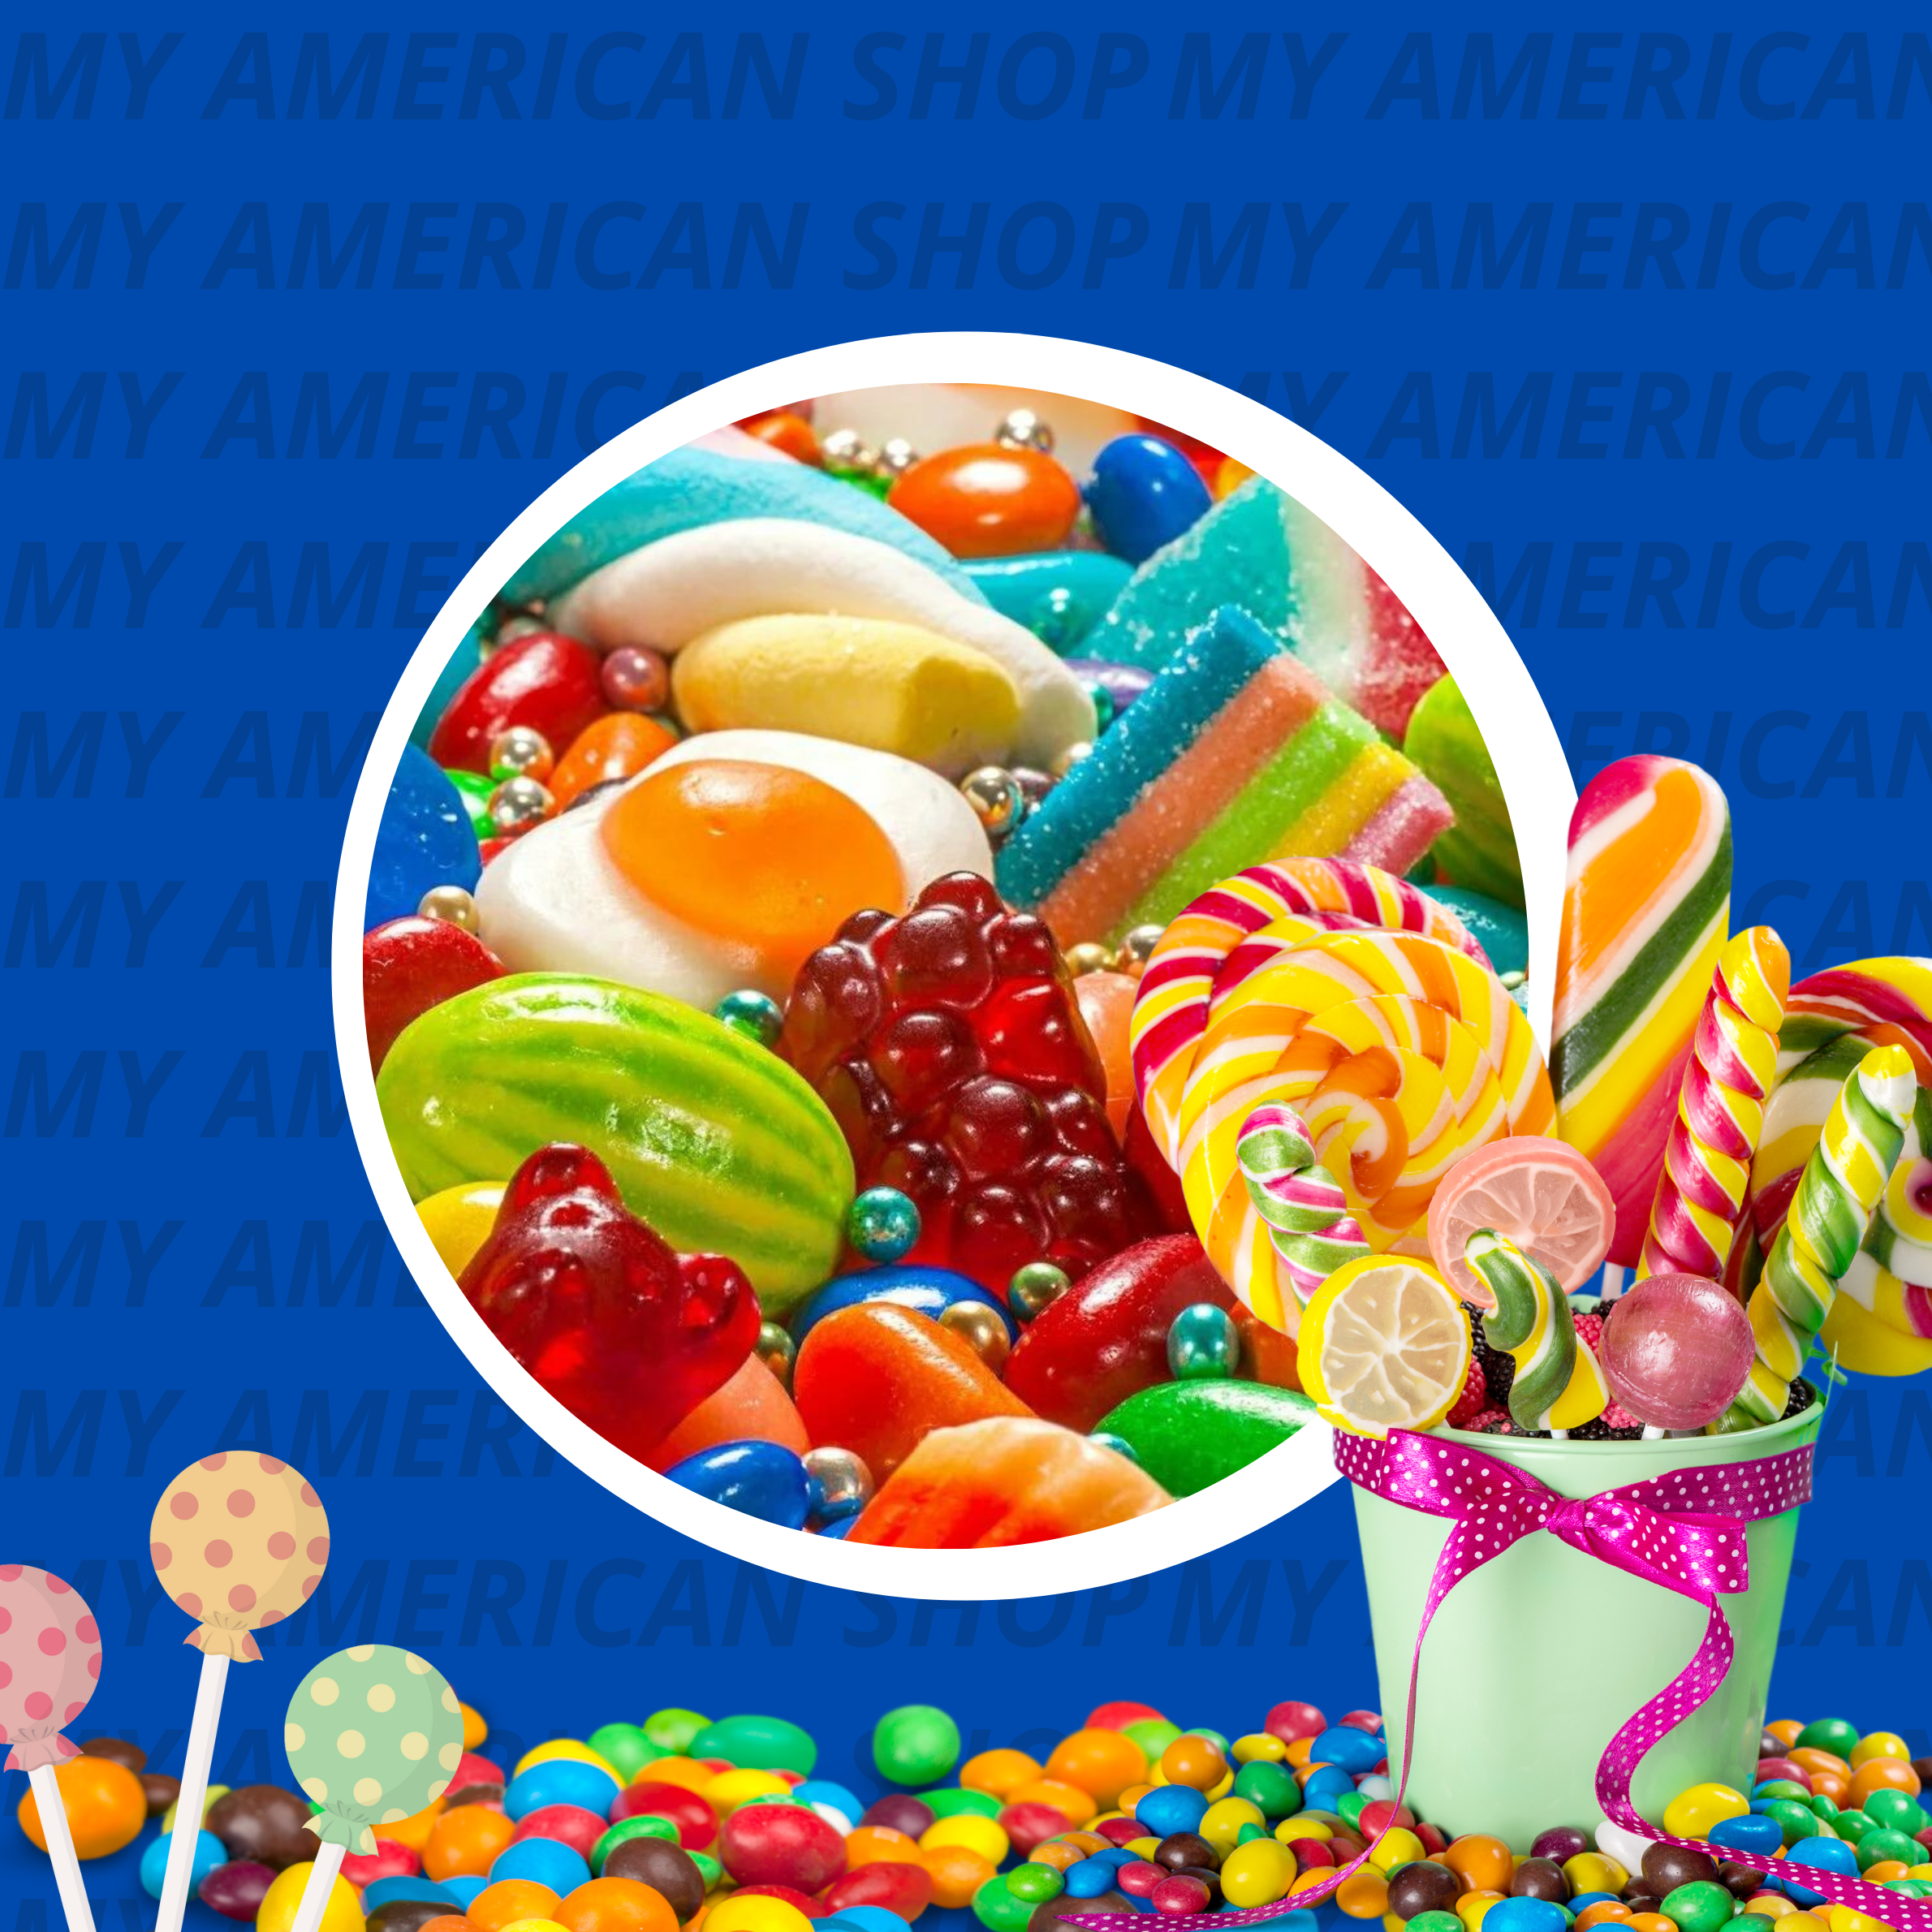 bonbons - My American Shop